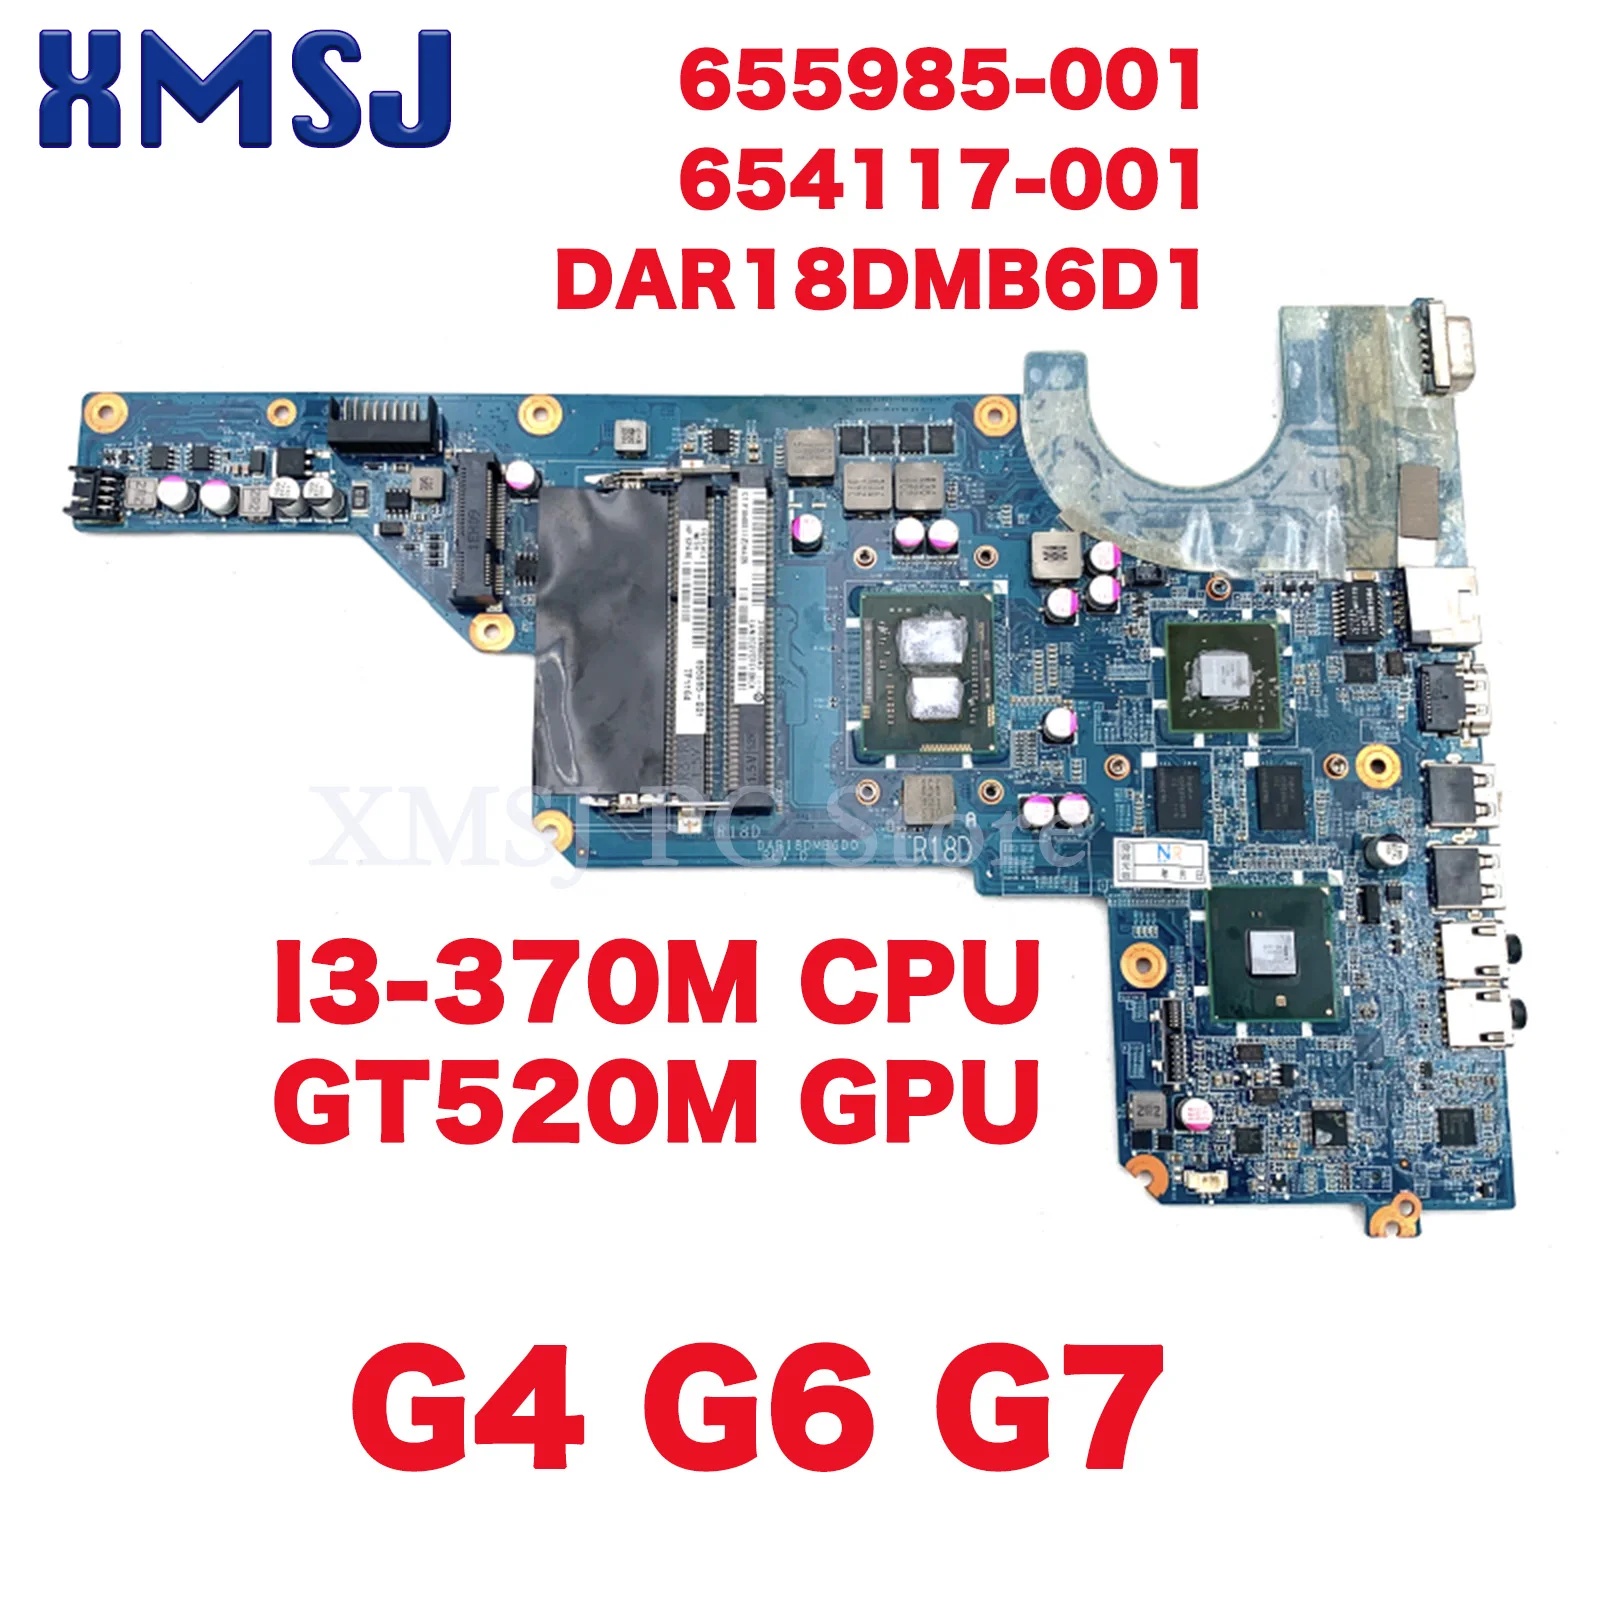 

XMSJ 655985-001 654117-001 DAR18DMB6D1 Laptop Motherboard For HP Pavilion G4 G6 G7 I3-370M CPU GT520M GPU DDR3 Main Board